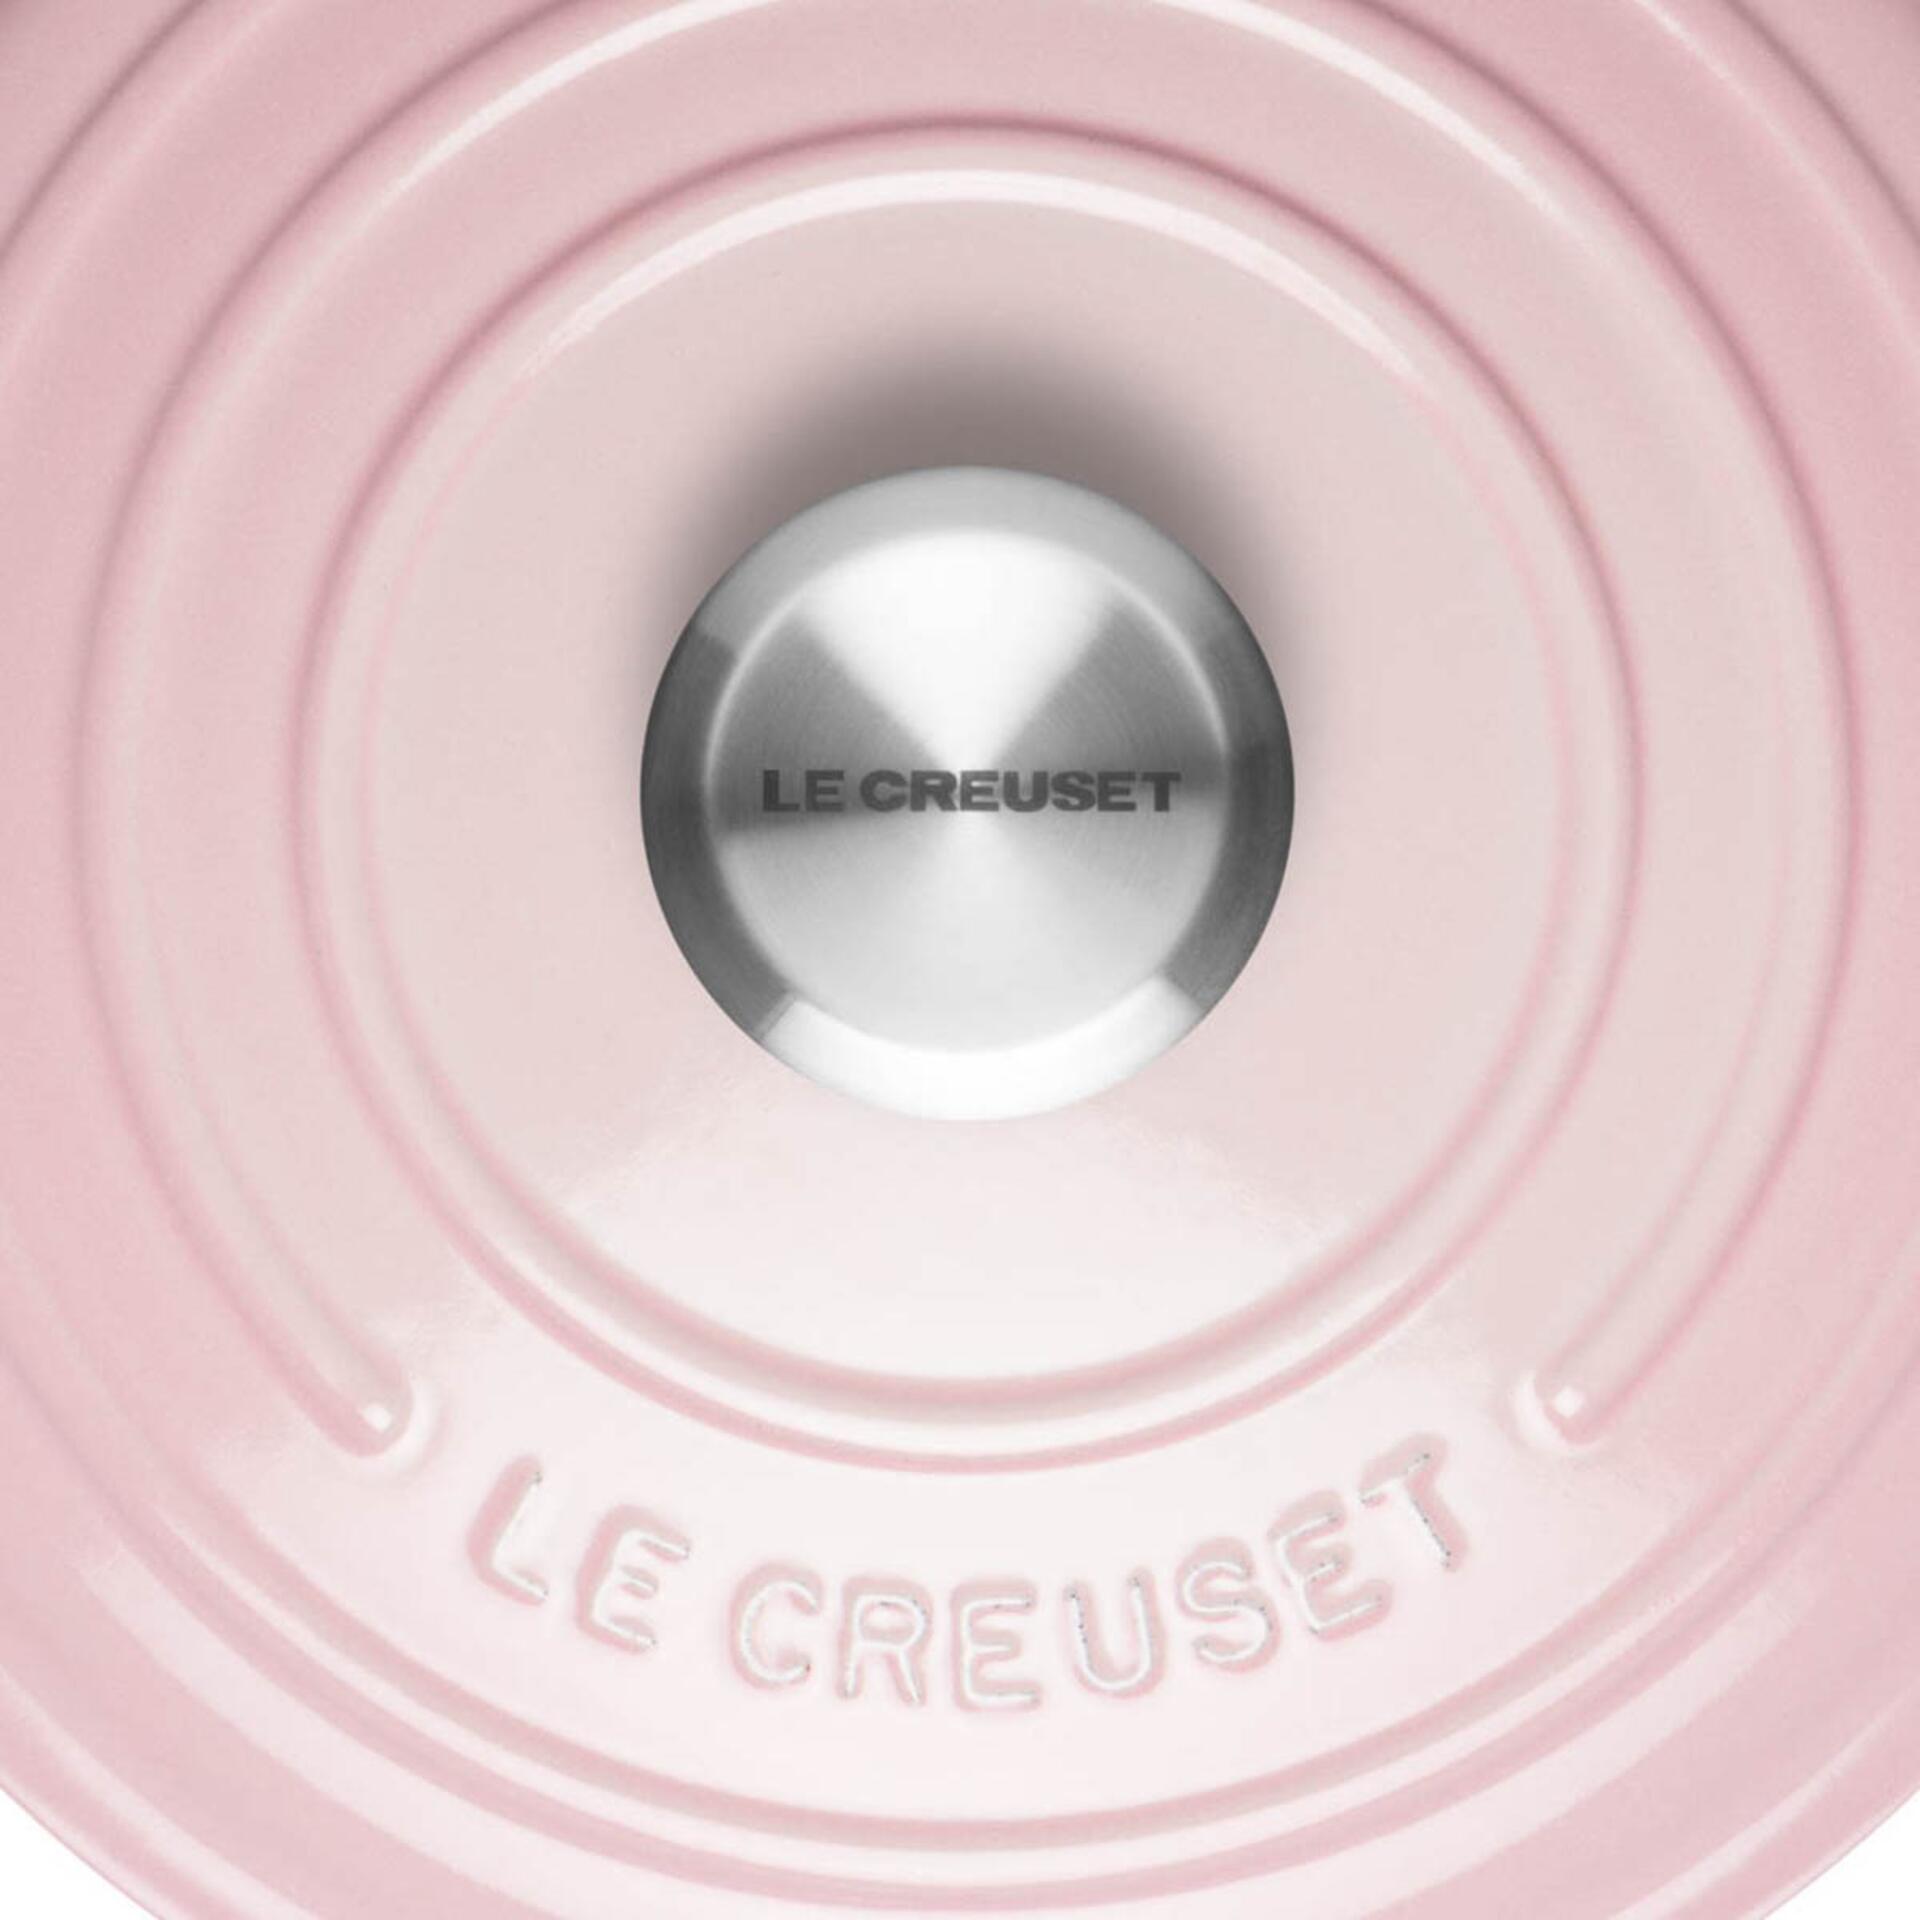 Le Creuset Bräter Signature 24 cm Shell Pink rund